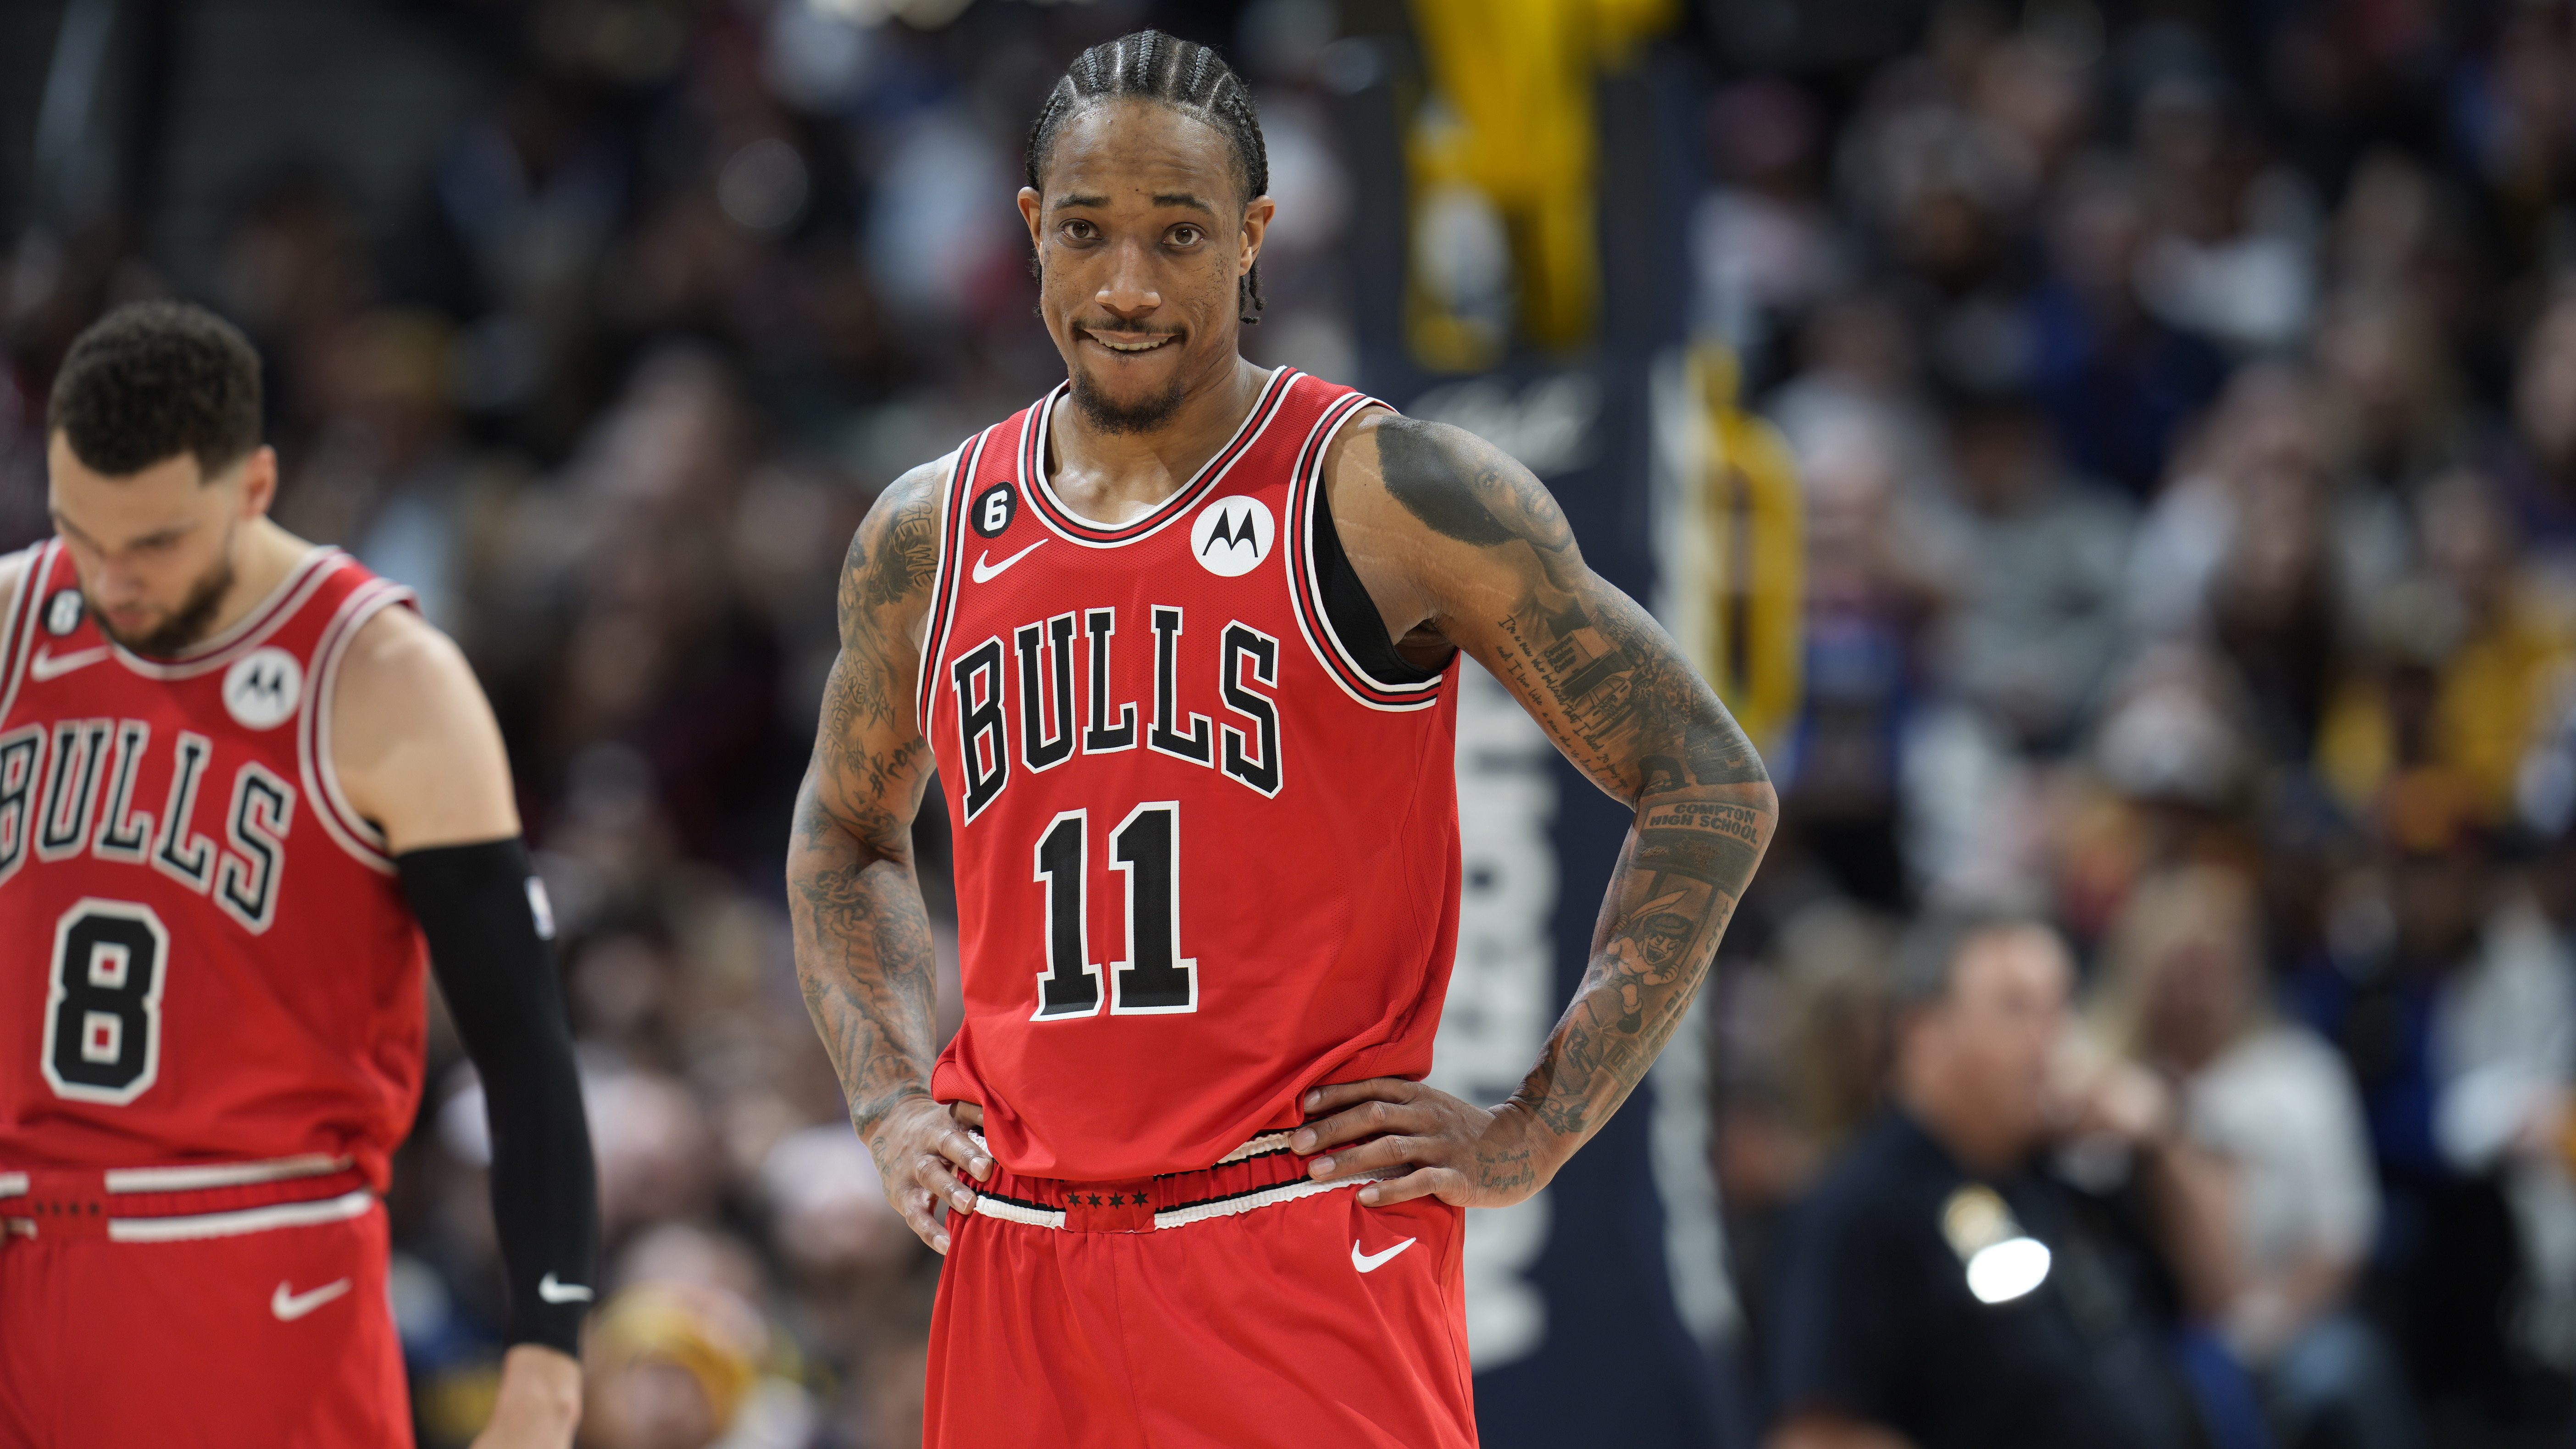 Chicago Bulls vs. Oklahoma City Thunder NBA betting odds, lines, trends